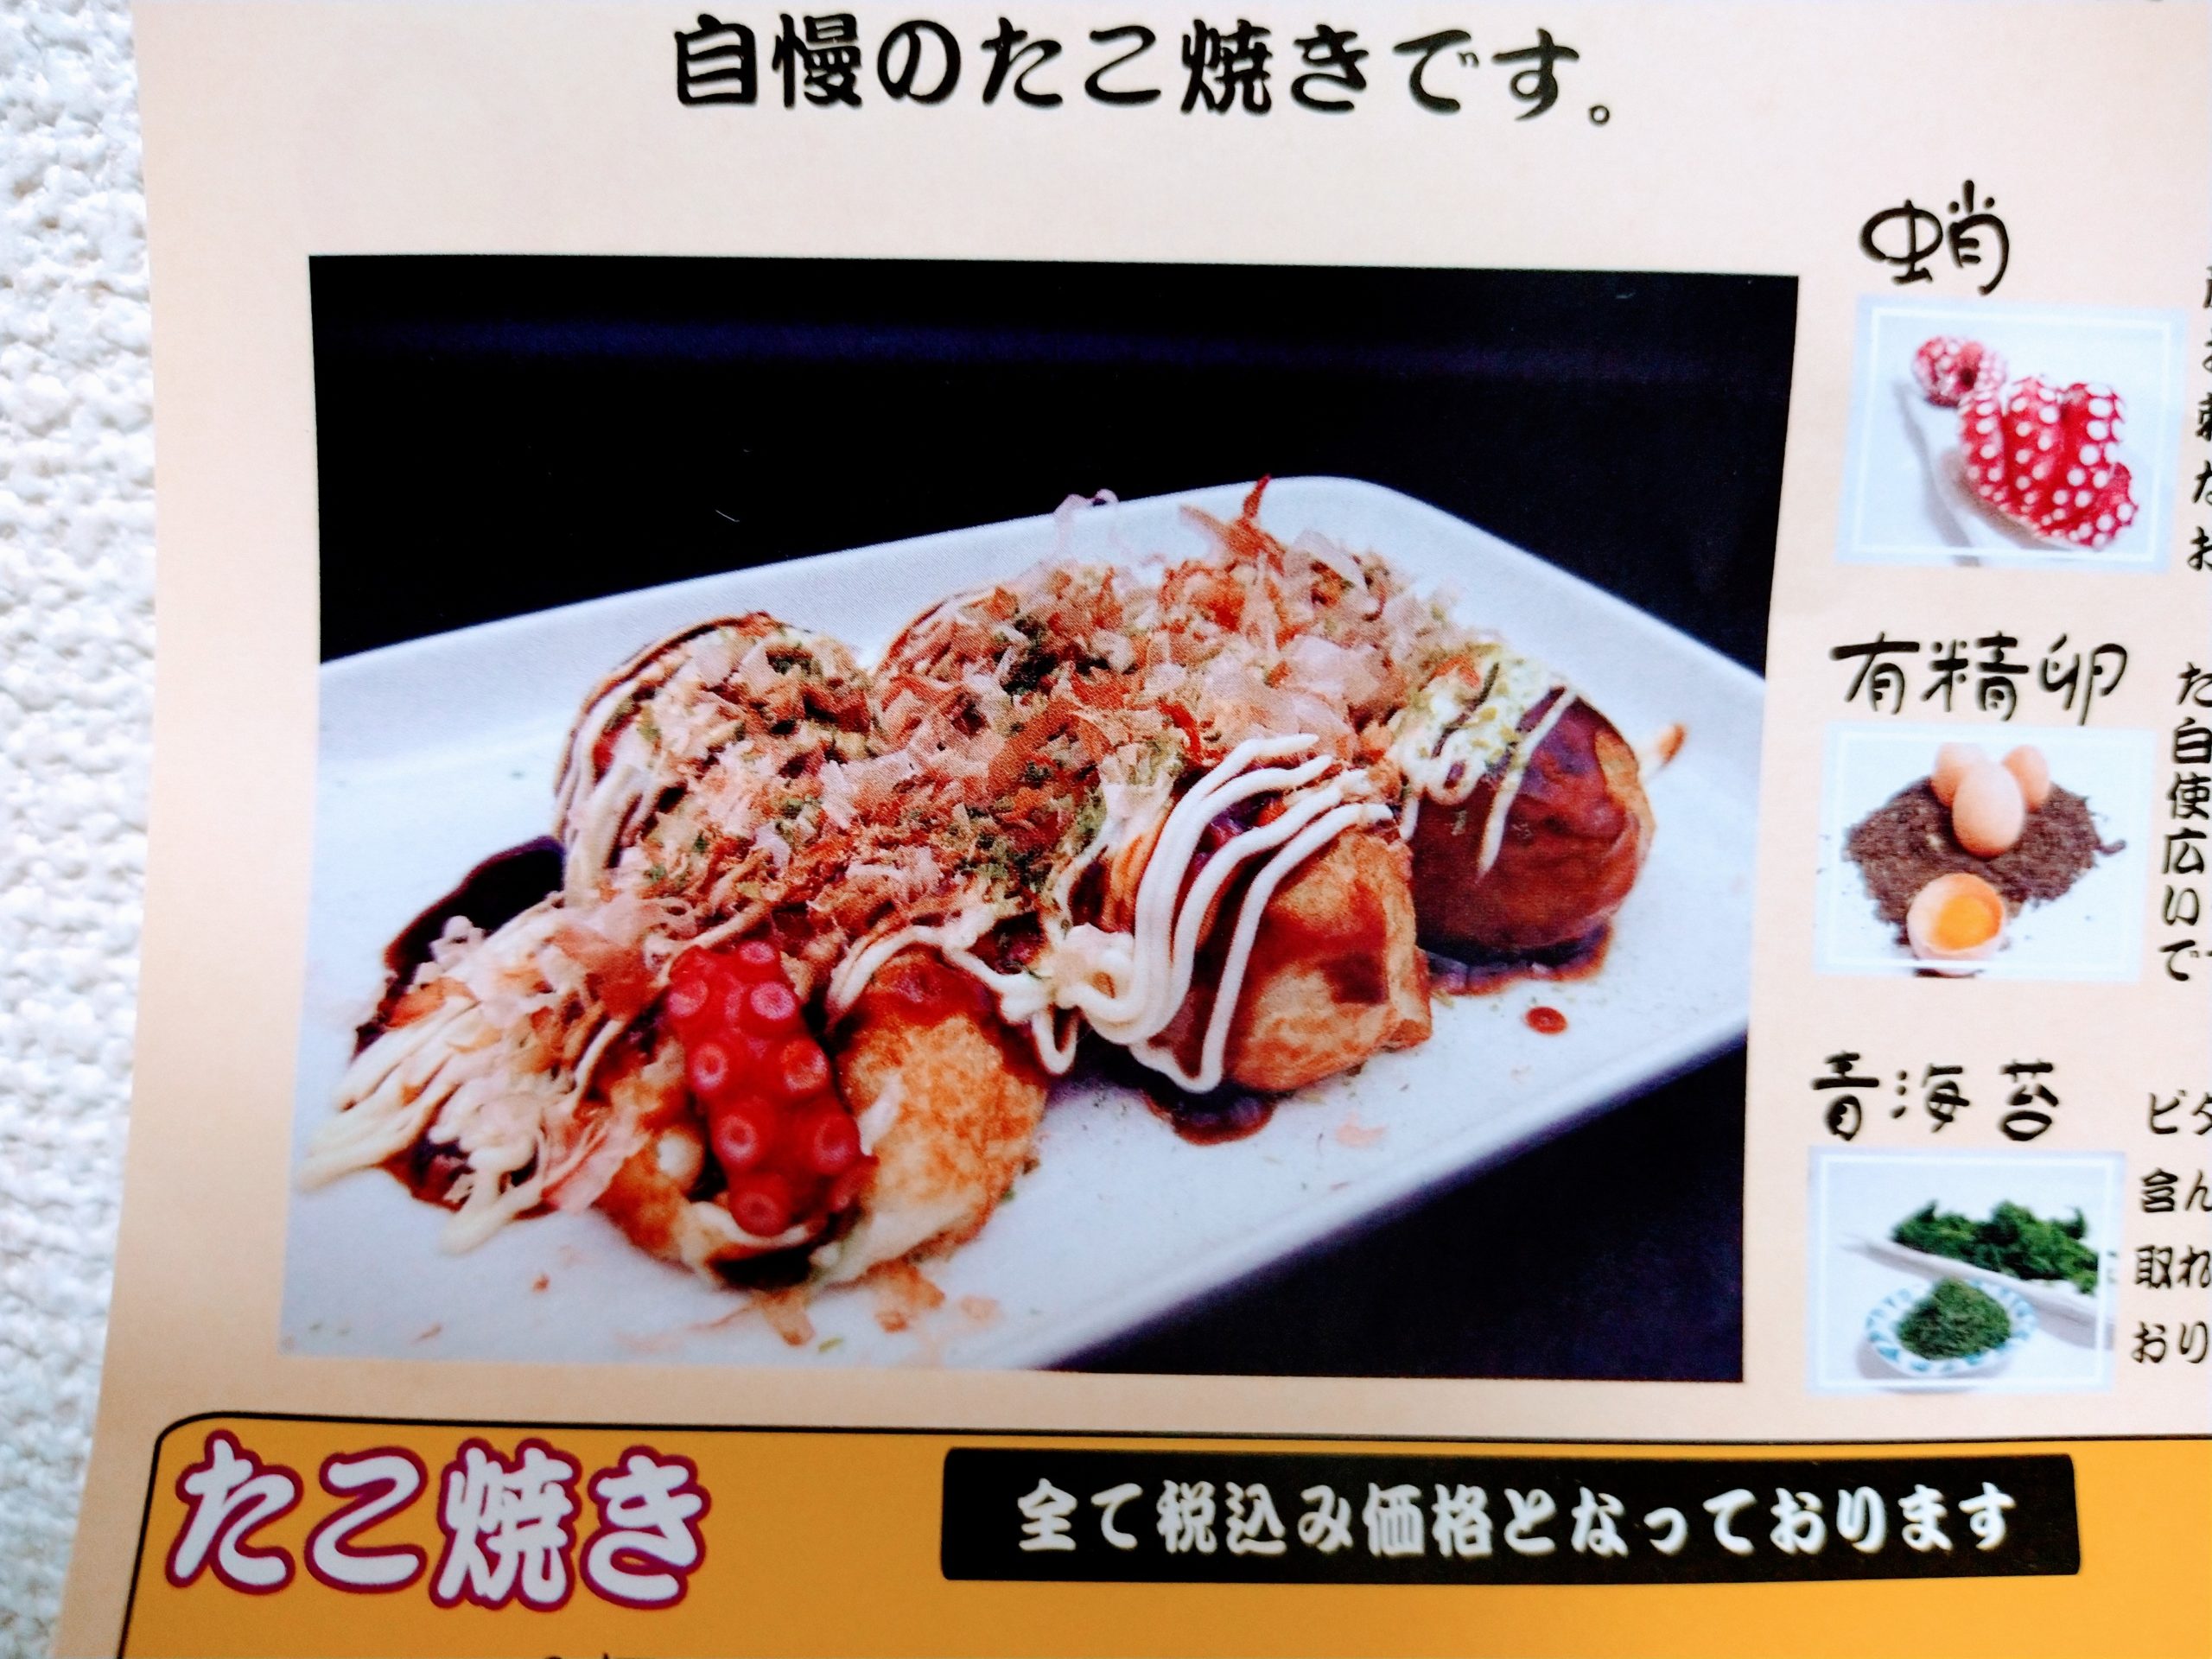 takoyaki-azumaya-menu-07